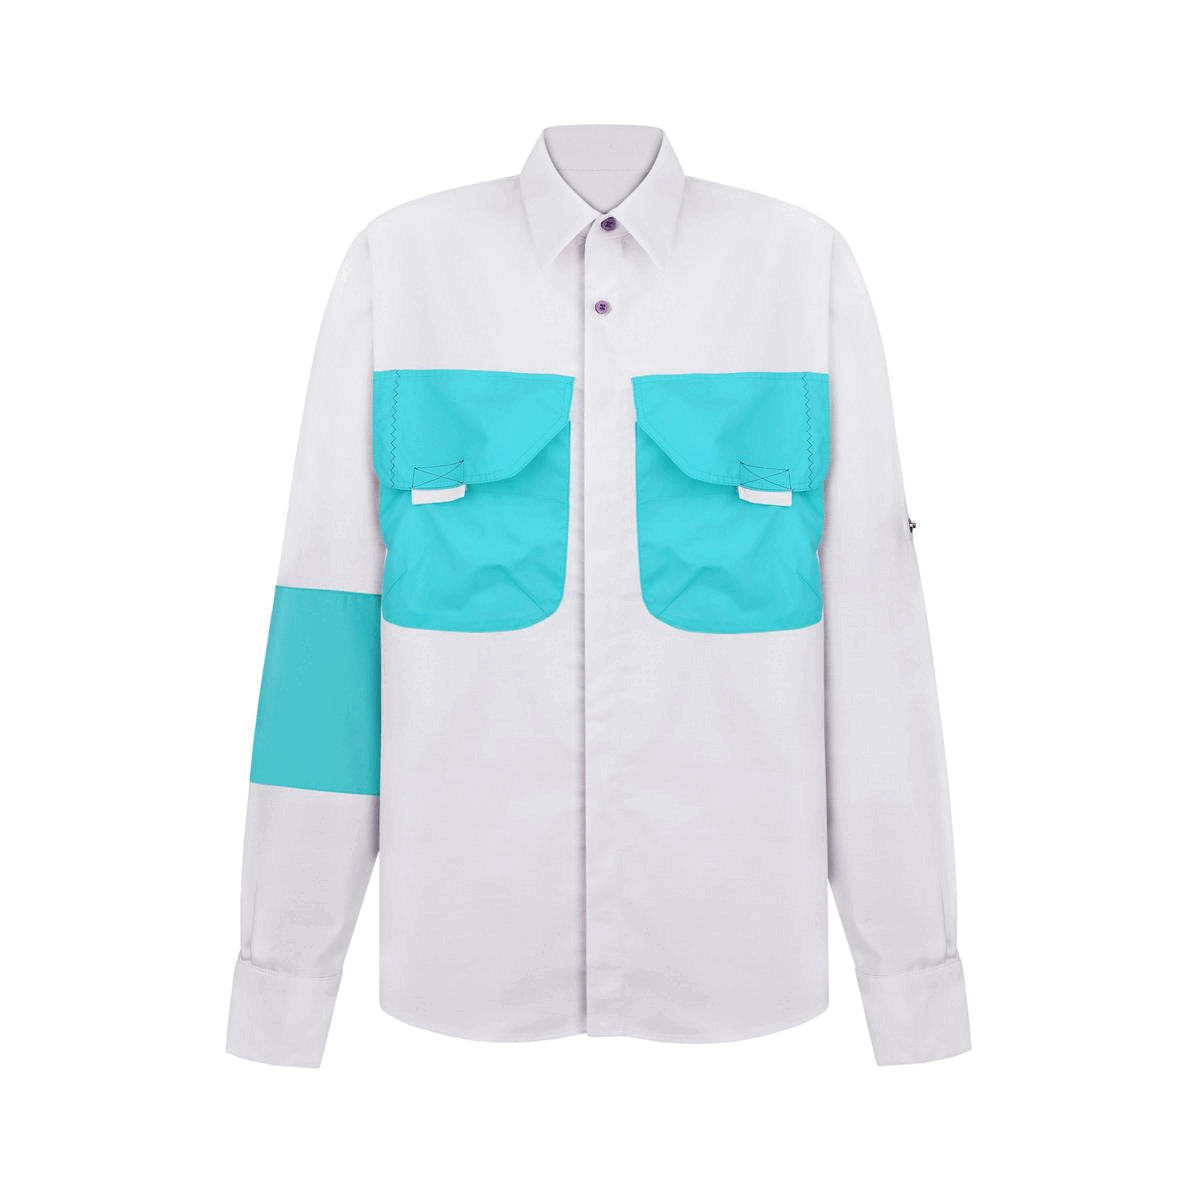 Long and short sleeve stylish cotton shirt from REwind, Ukraine